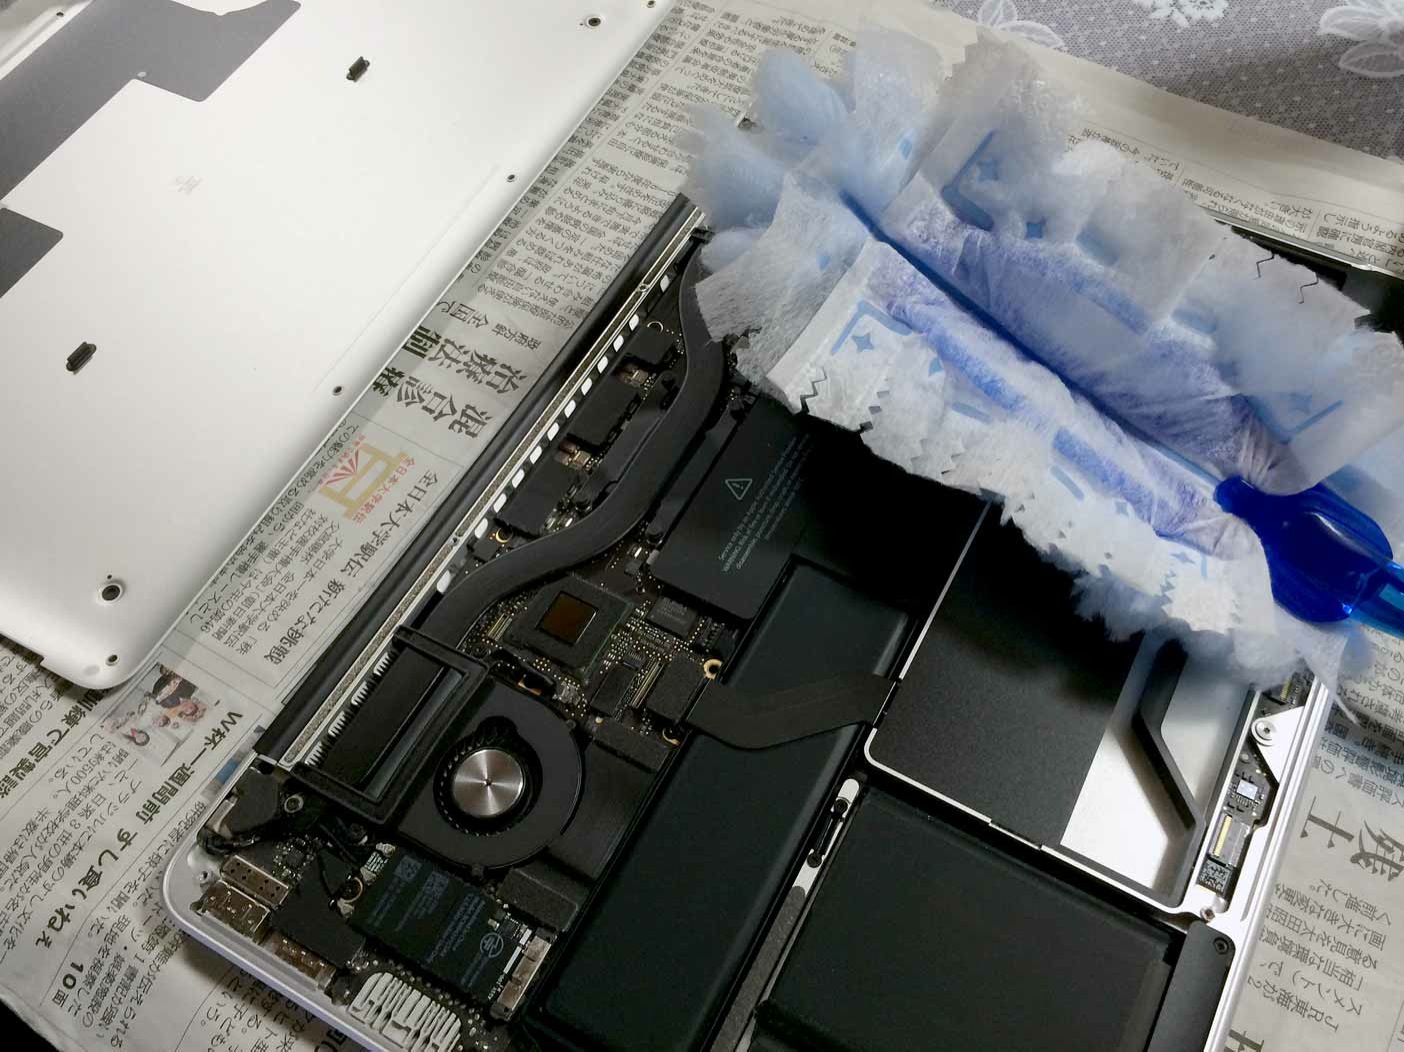 Macbookの掃除はハンドクリーナーがあると便利